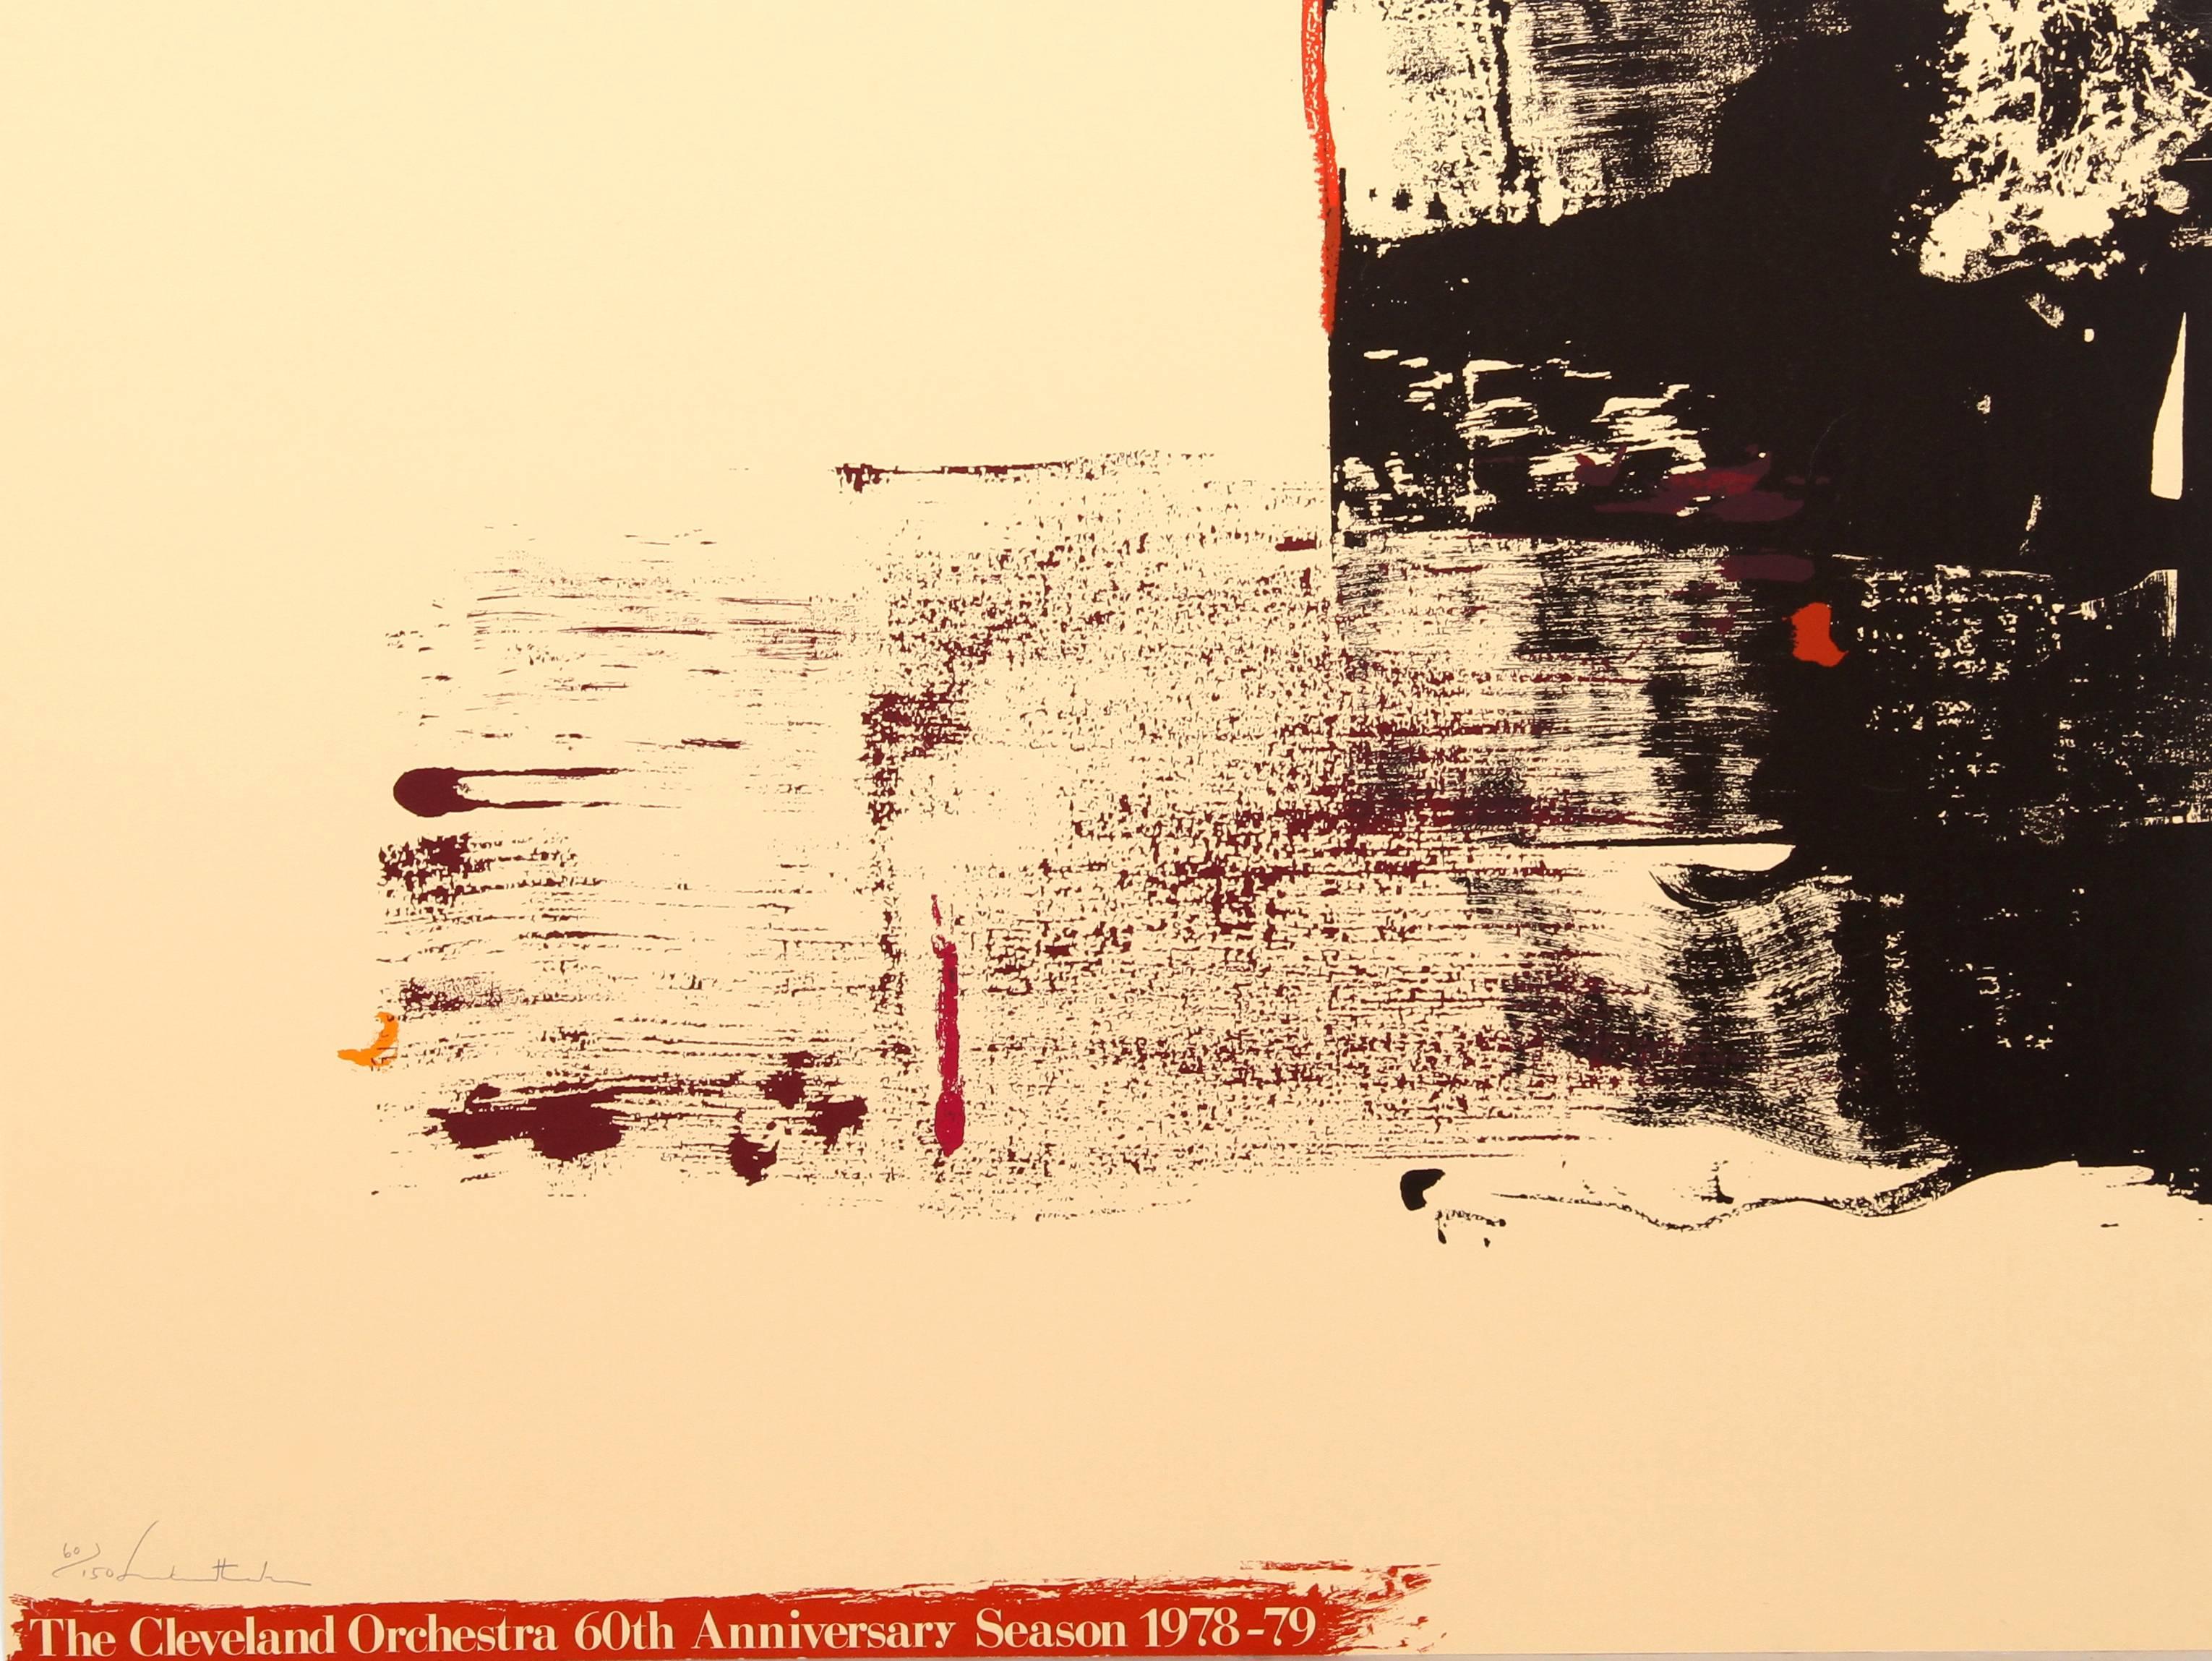 Helen Frankenthaler Abstract Print - Cleveland Orchestra